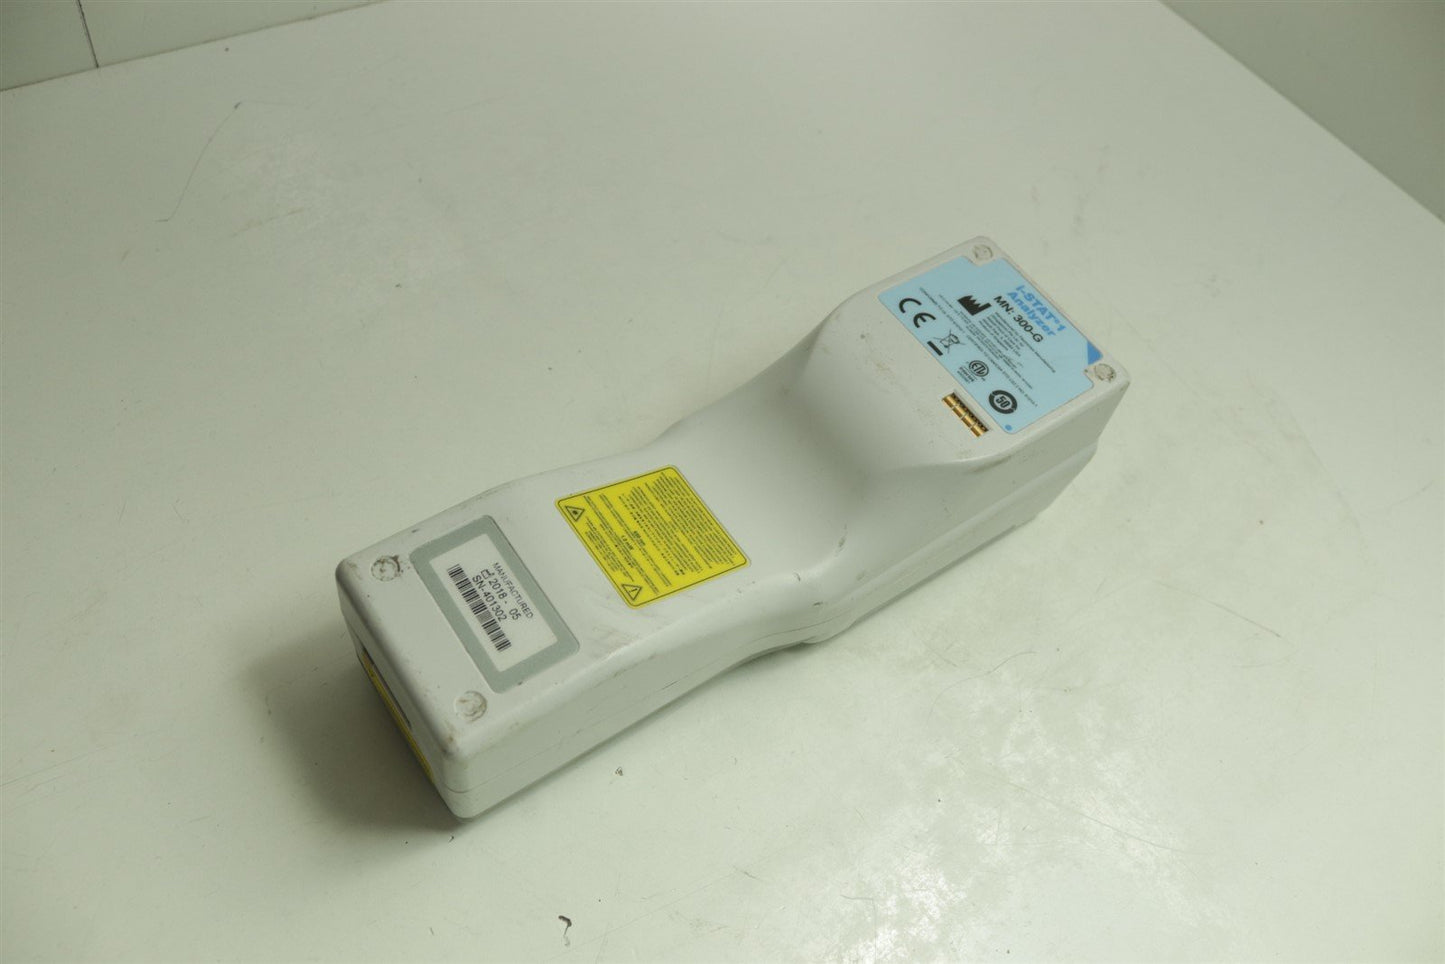 Abbott i-STAT 1 300-G Handheld Blood Hematology Analyzer UNTESTED